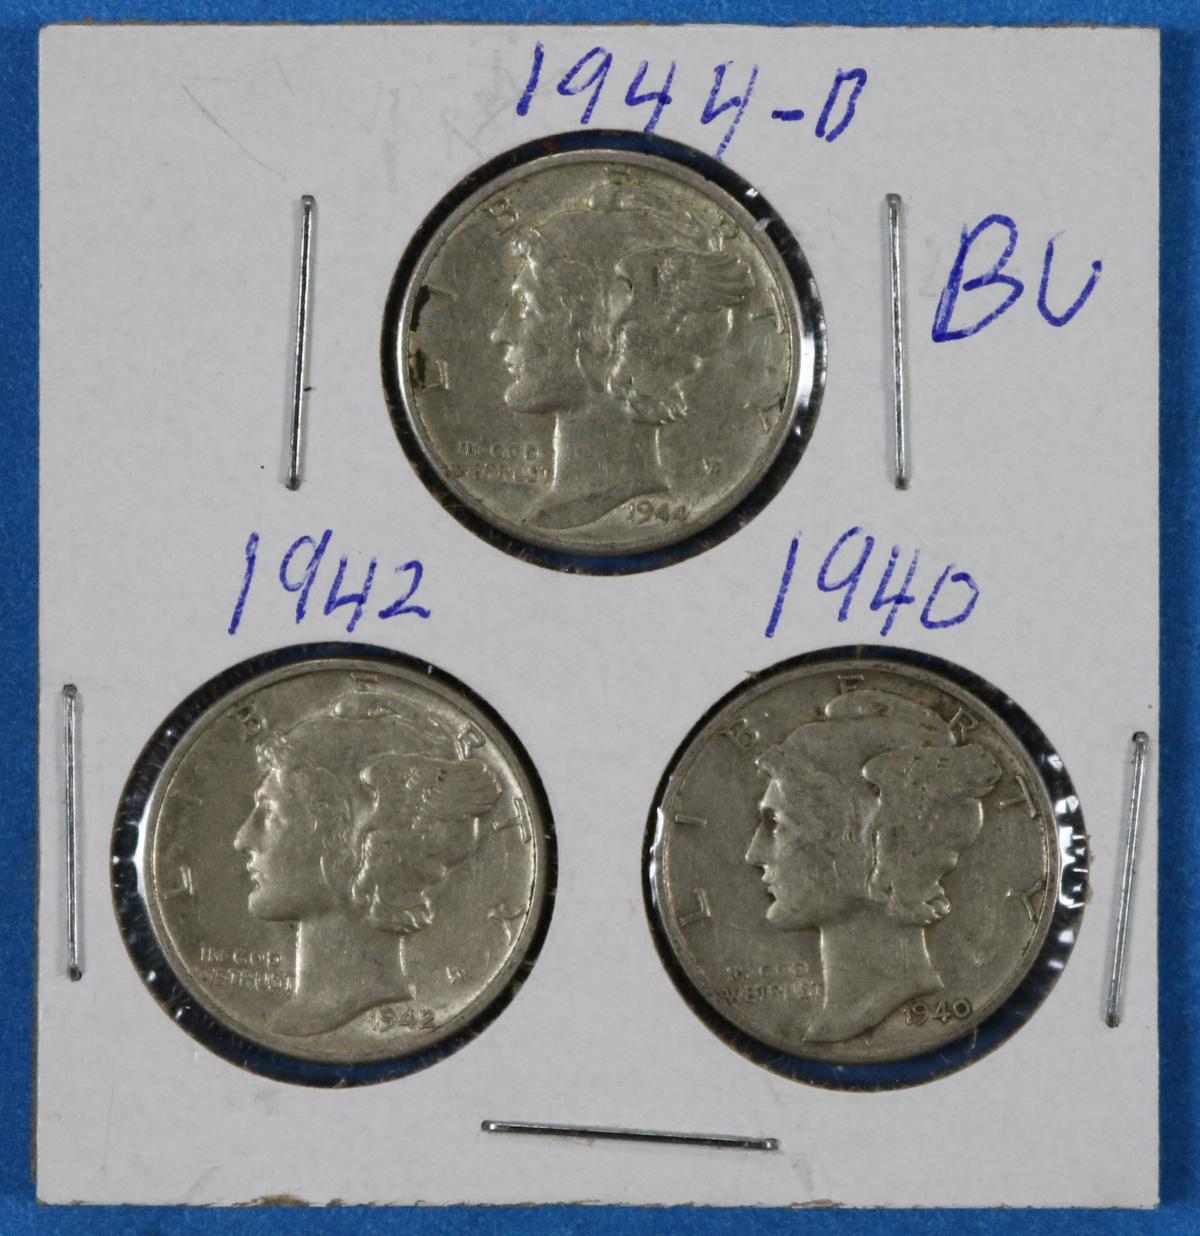 Lot of 3 Silver Mercury Dimes 1940 1942 1944-D